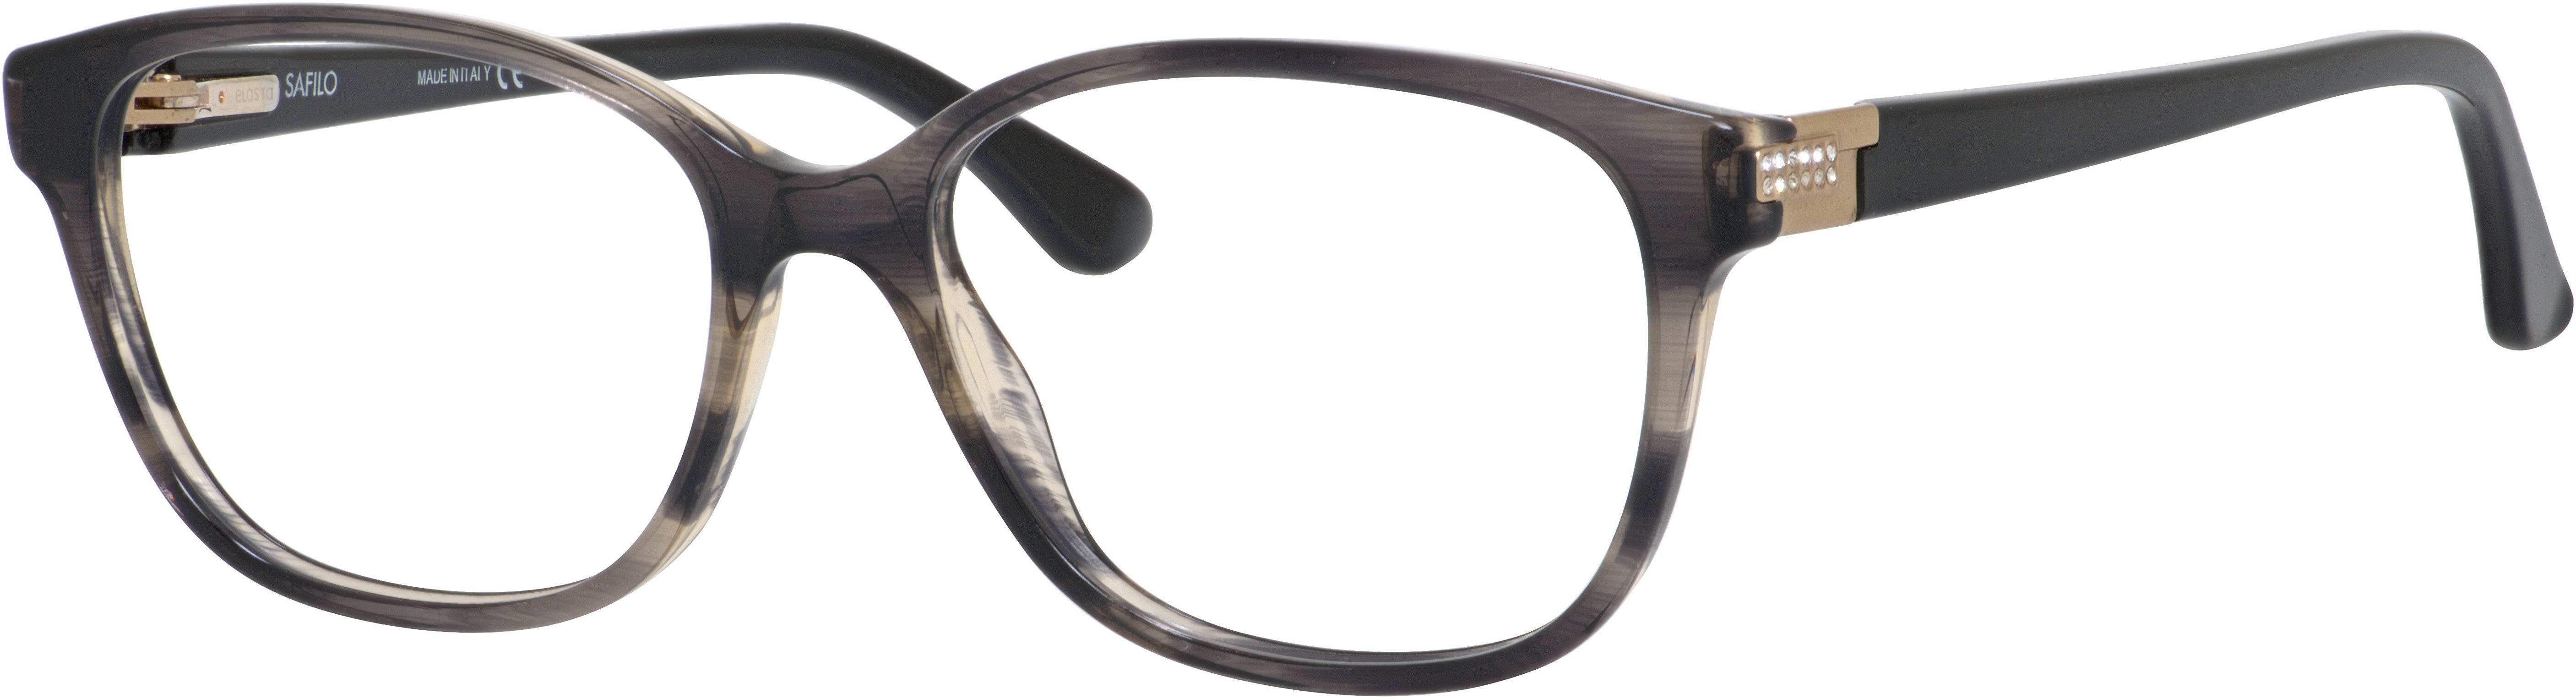  Emozioni 4046 Oval Modified Eyeglasses 0PPO-0PPO  Strp Black Beige (00 Demo Lens)